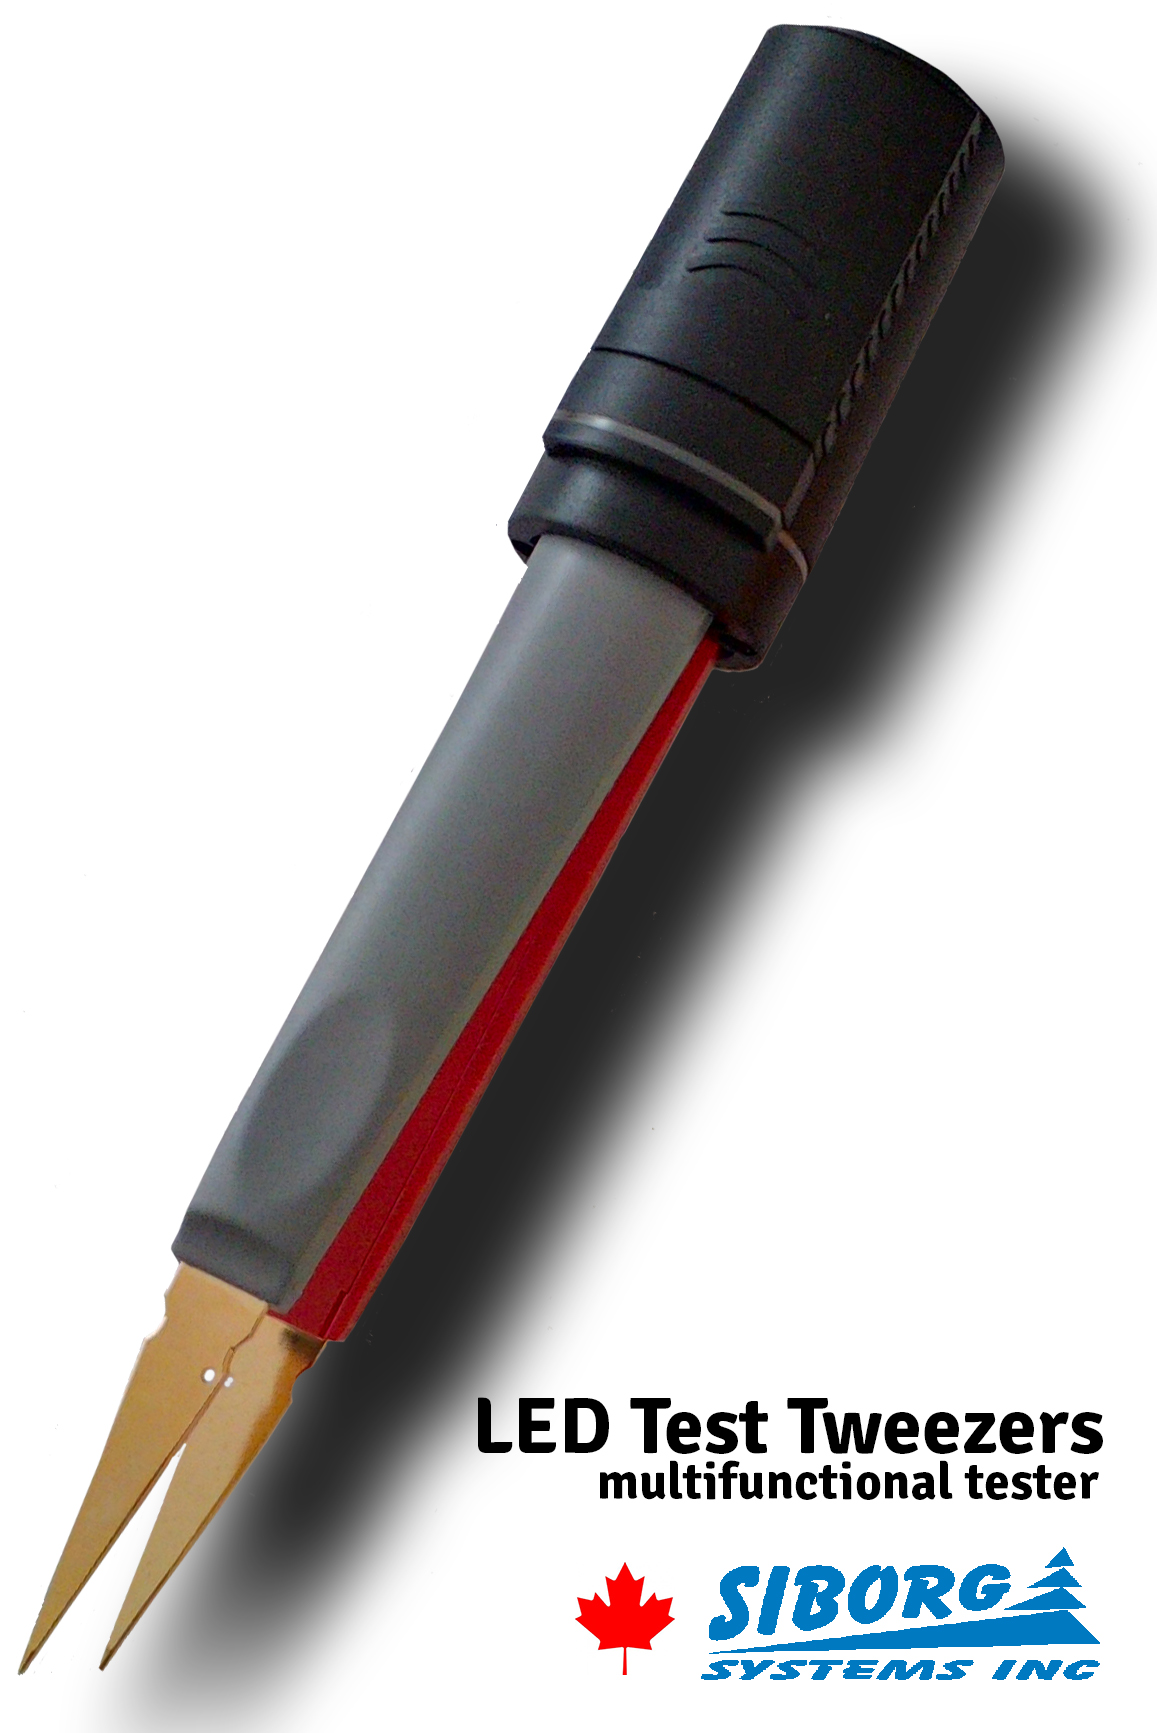 LED Test Tweezers